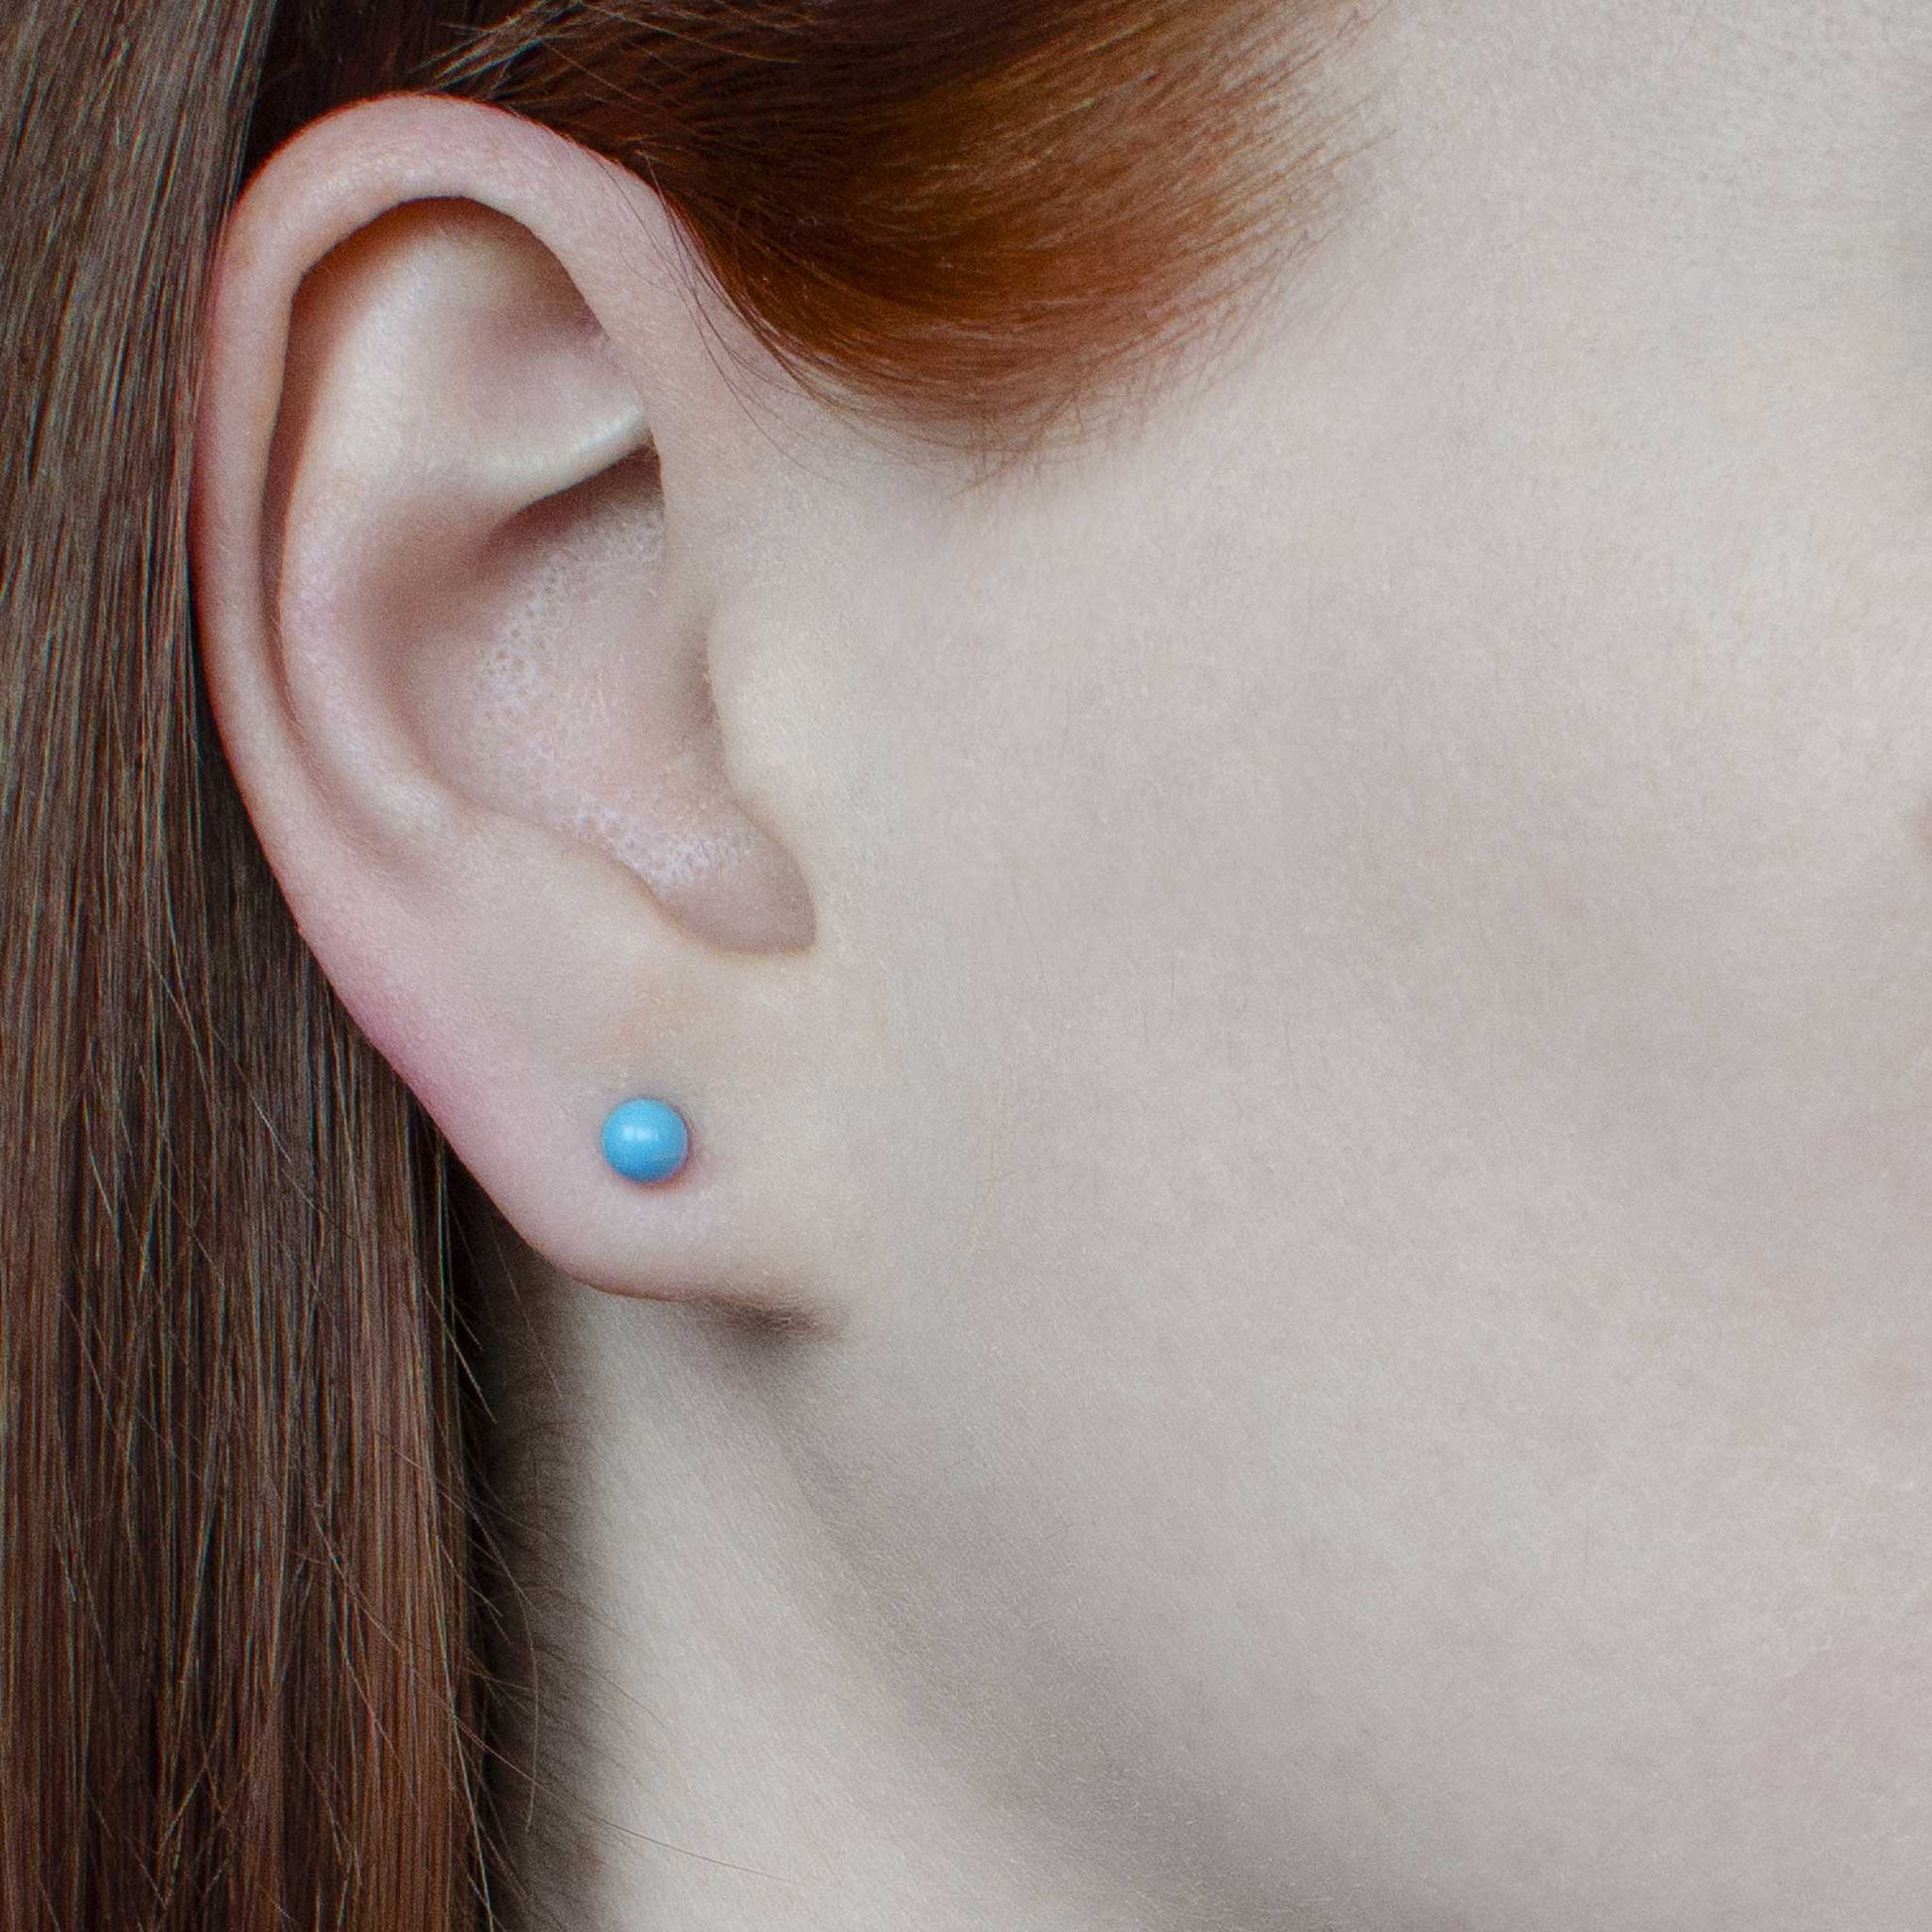 Woman wearing tiny Turquoise gemstone stud earring in earlobe